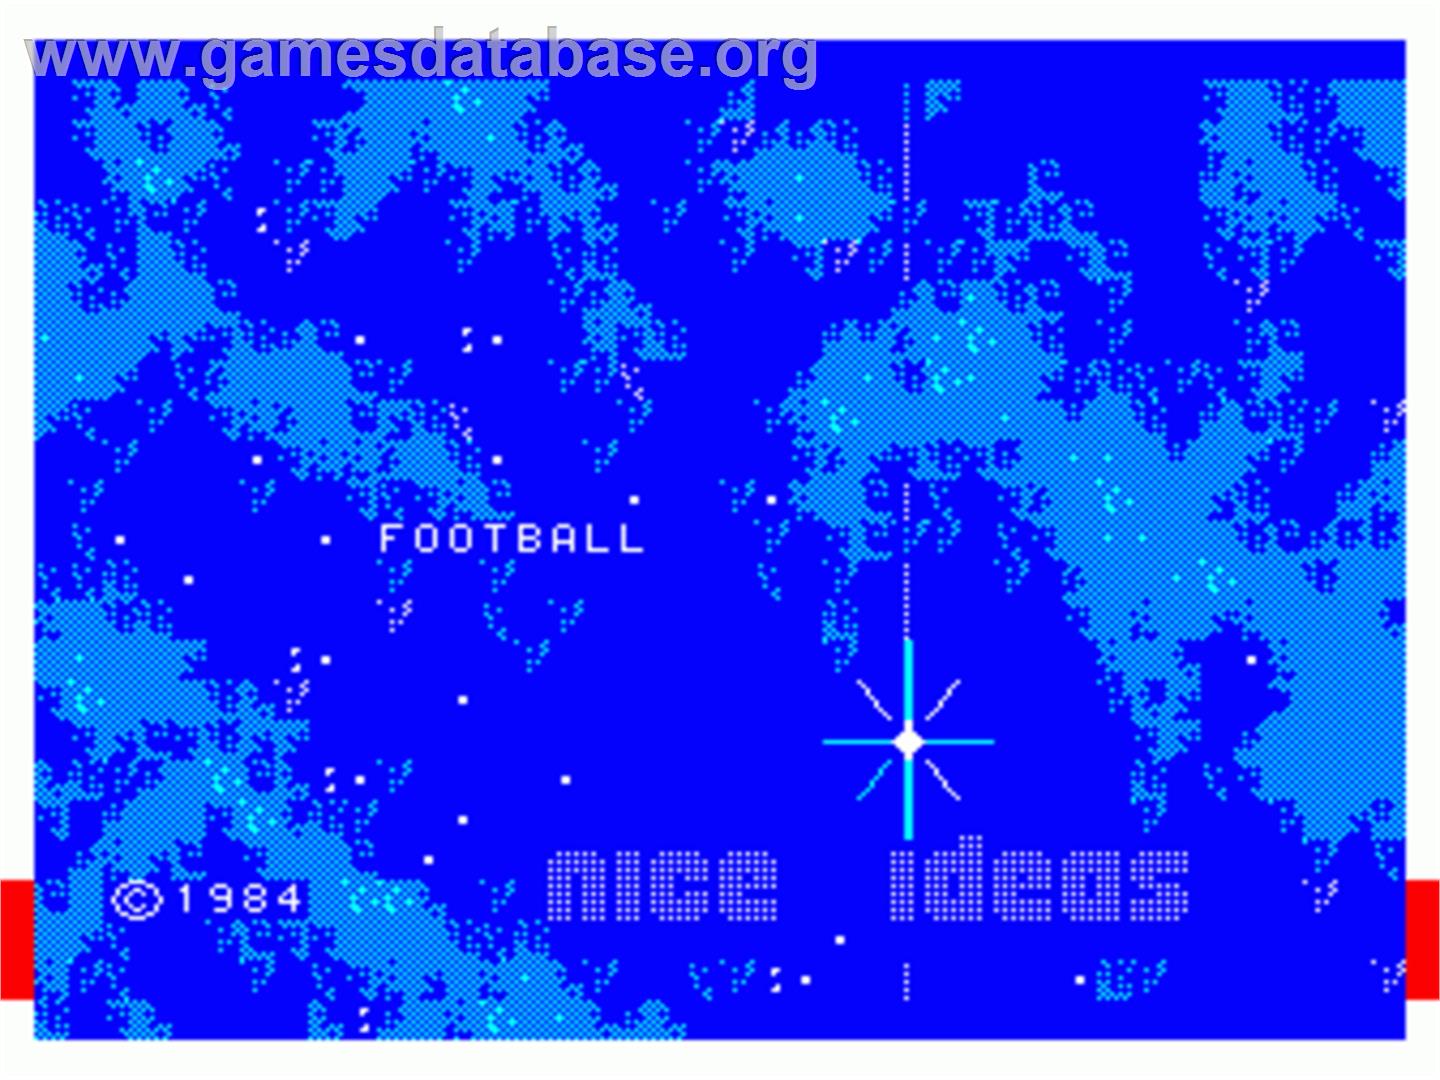 Football - Philips VG 5000 - Artwork - Title Screen